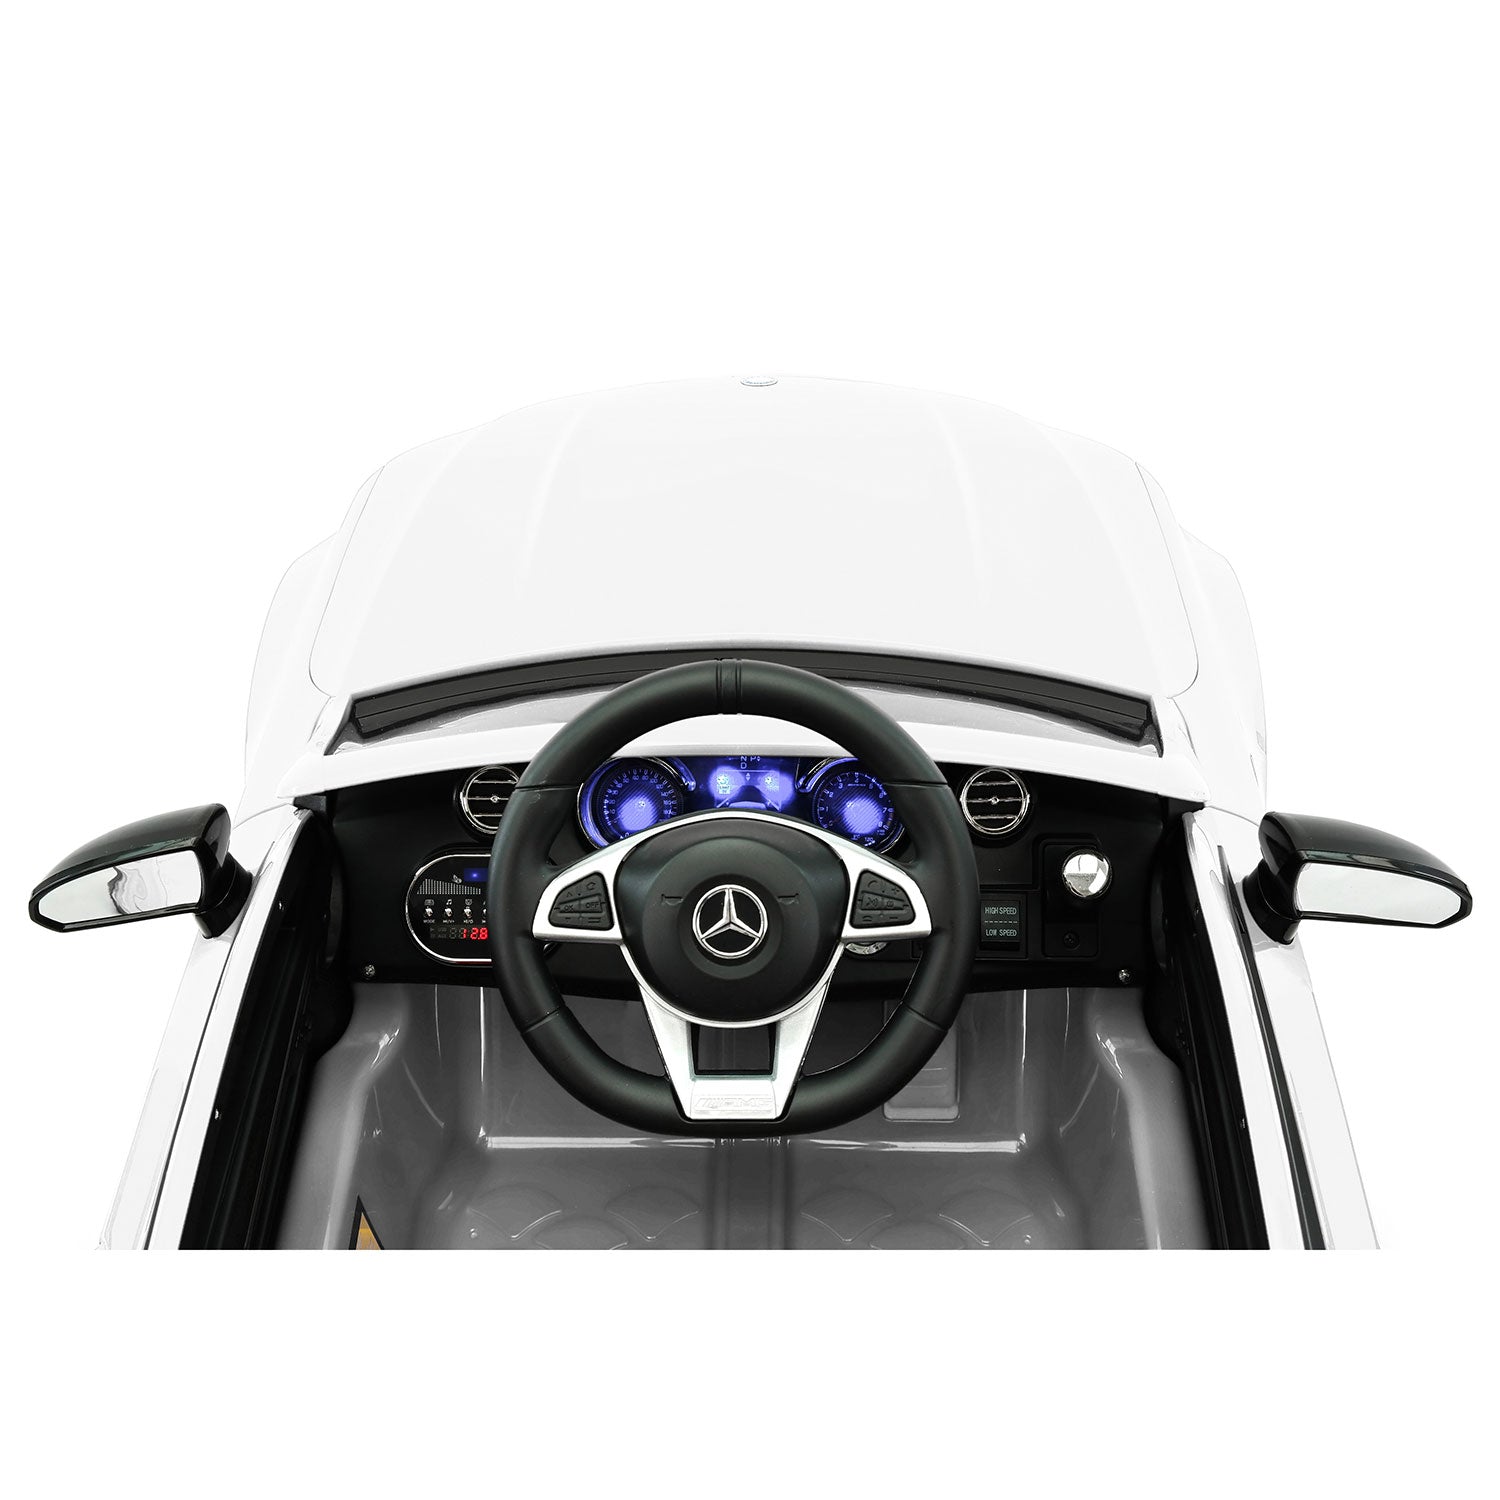 Mercedes C63s 12v Kids Ride-on Car With R/c Parental Remote | White